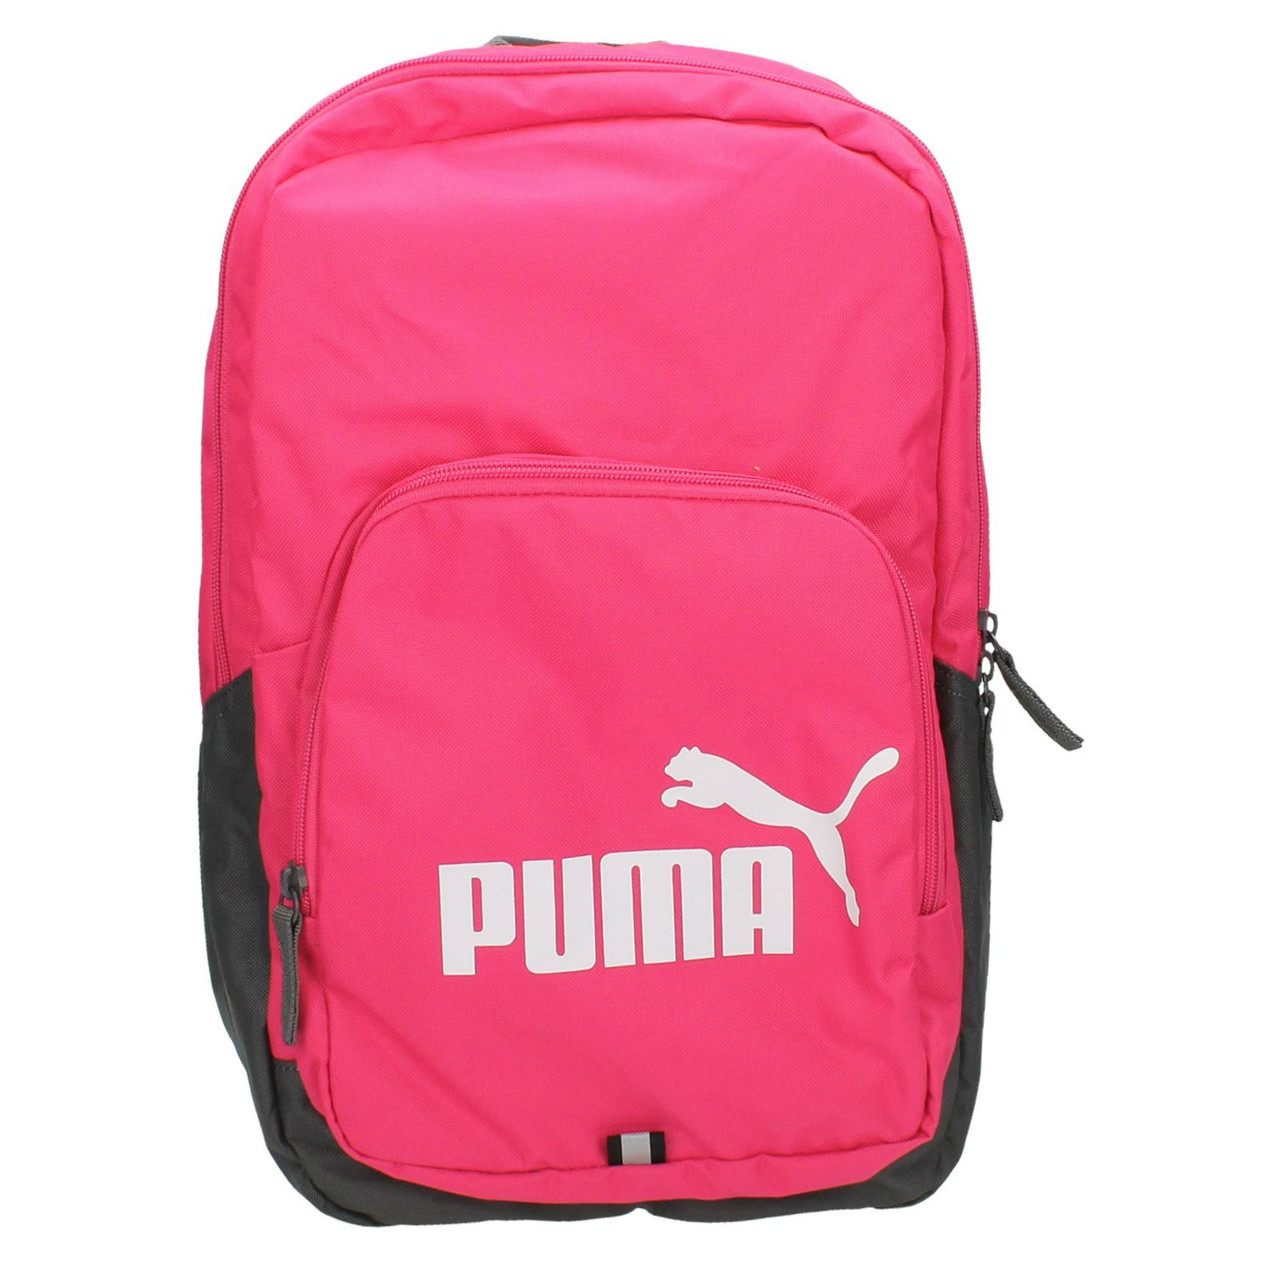 puma school bags